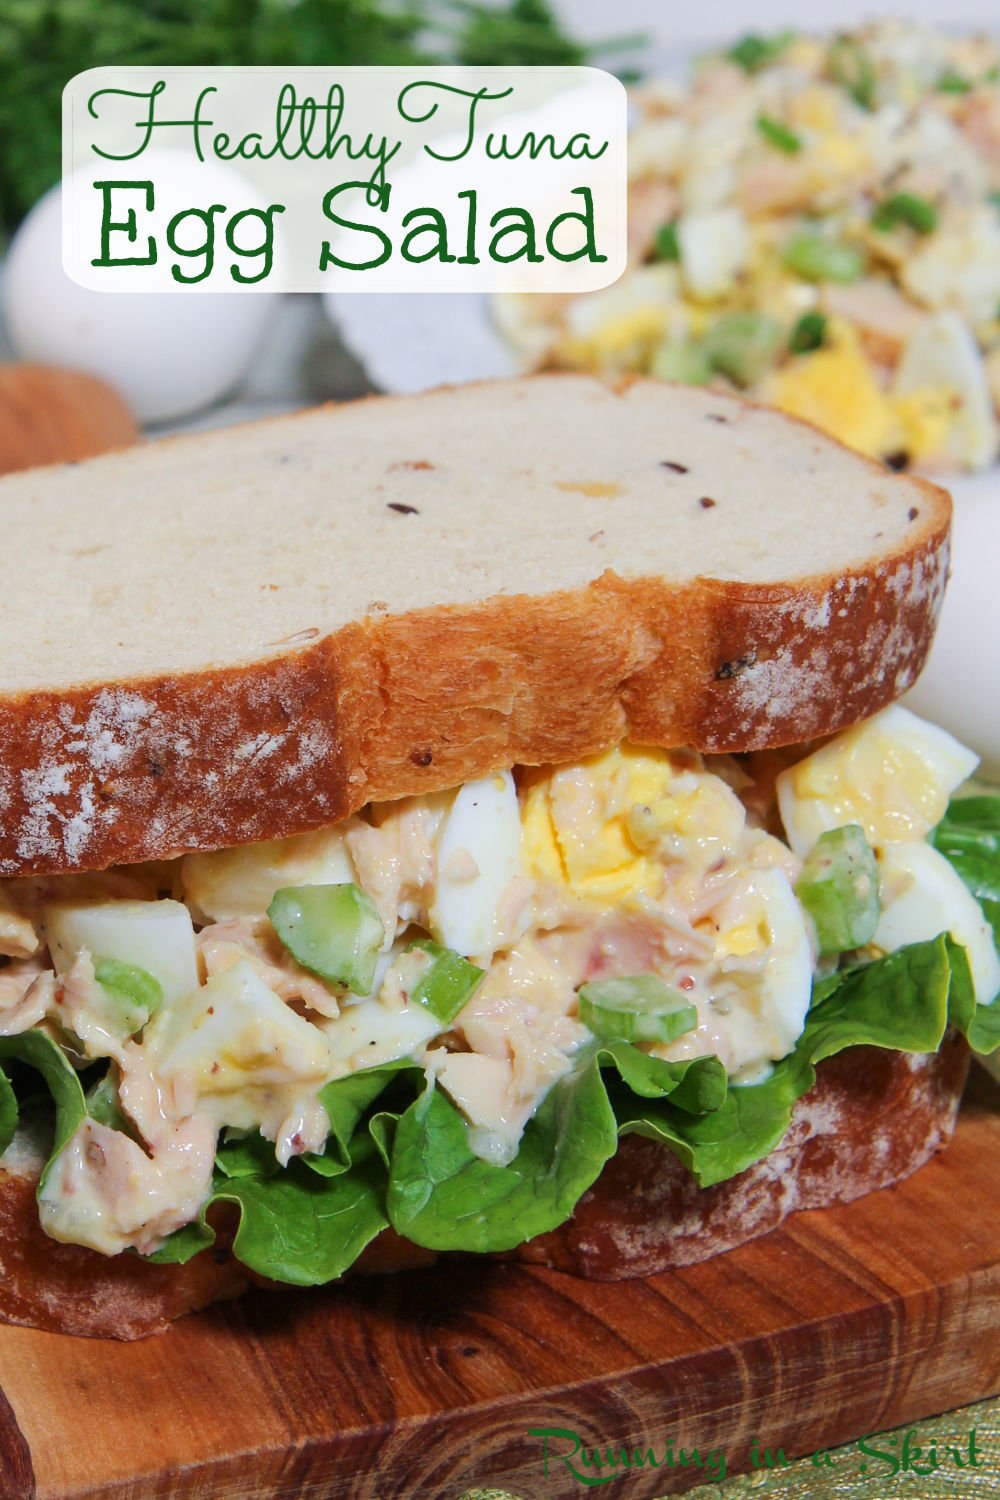 Tuna Egg Salad via @juliewunder